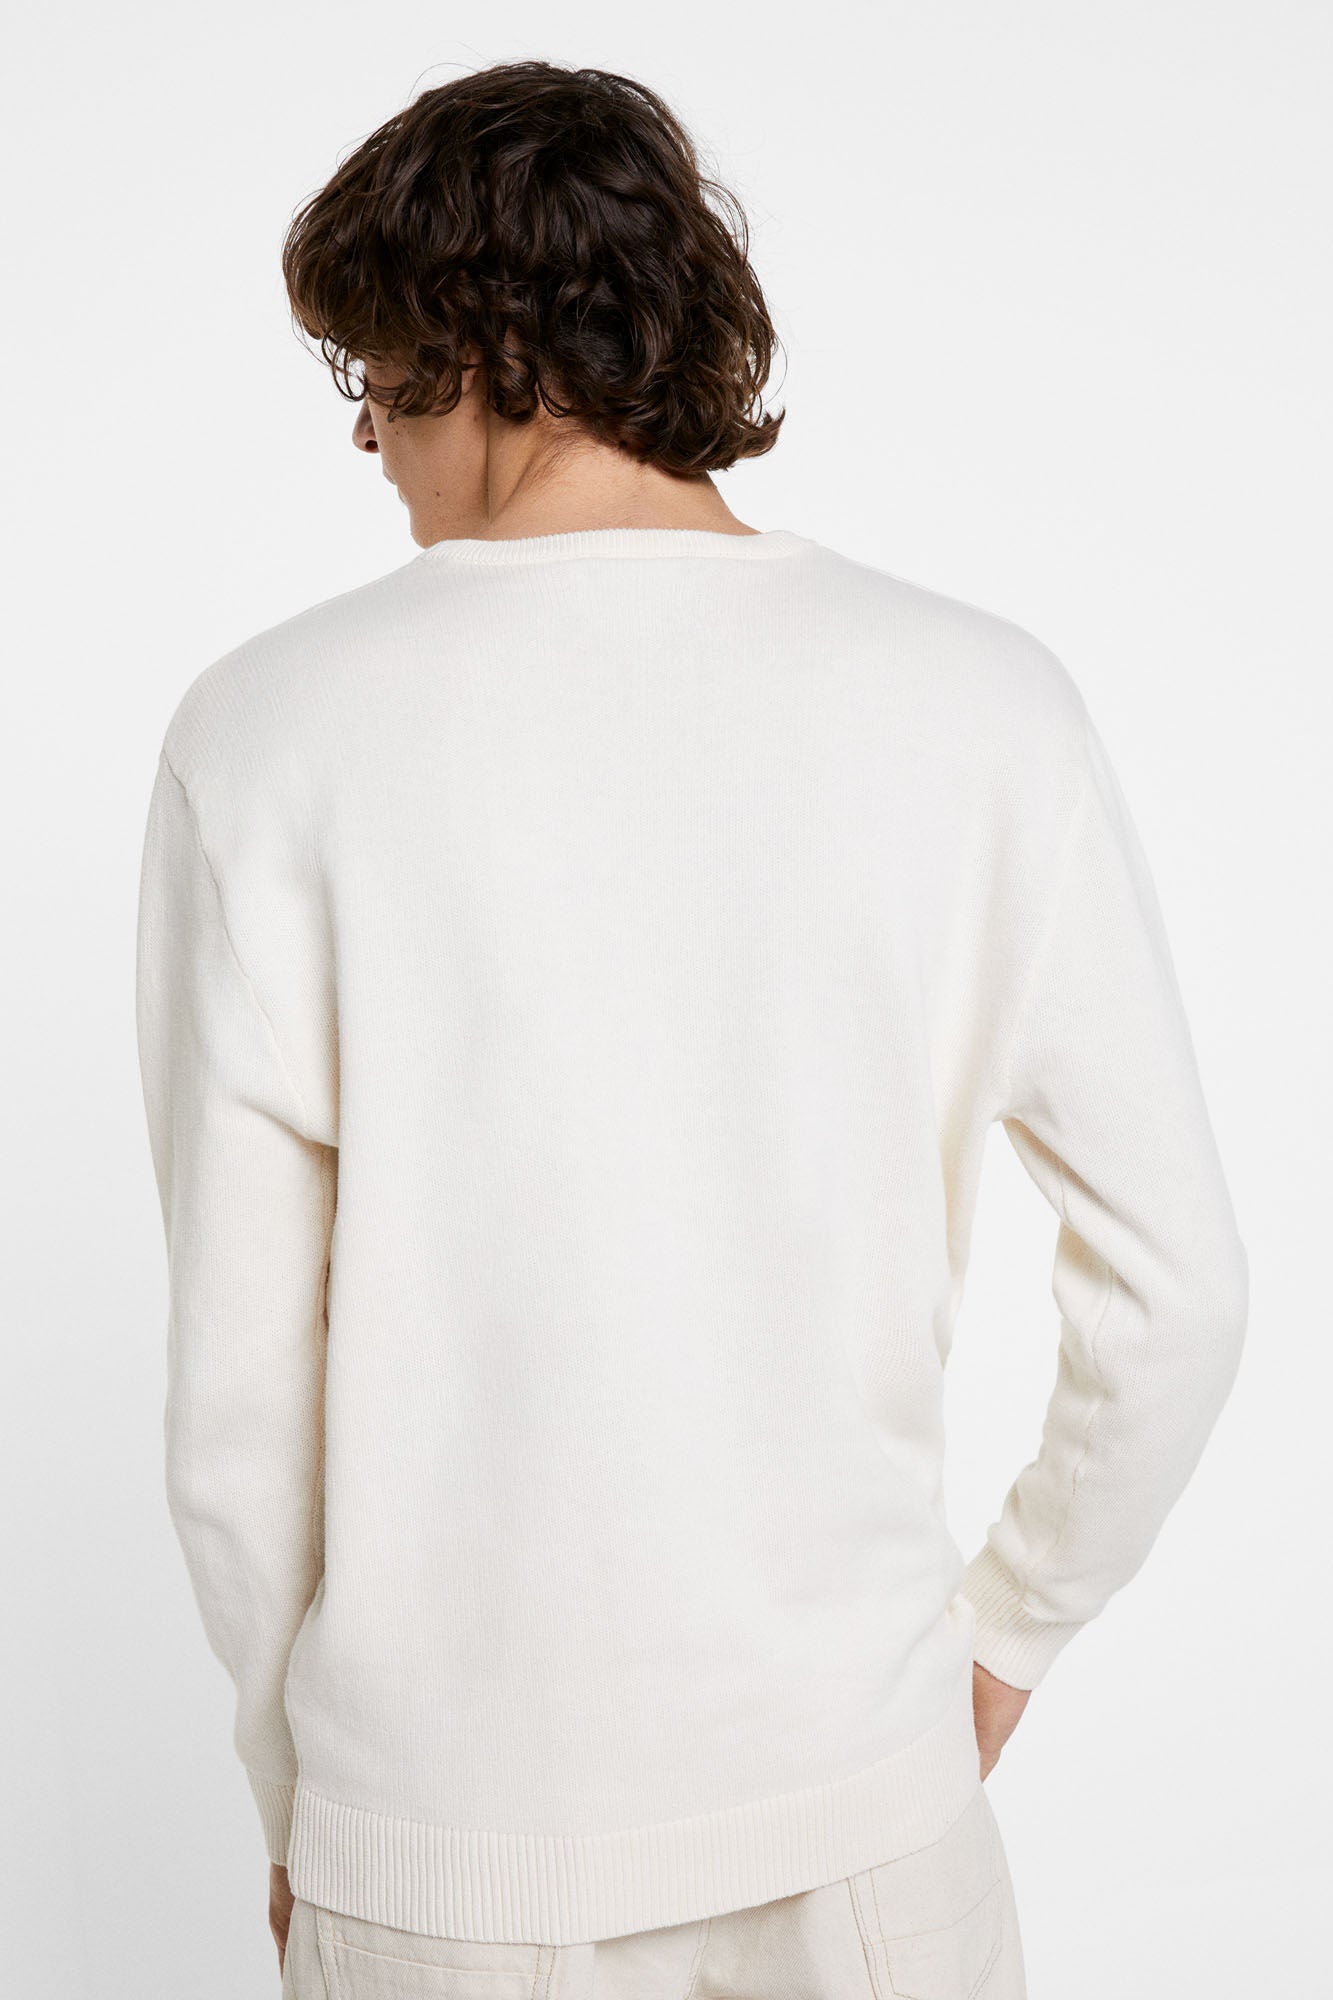 Plain embroidered jumper